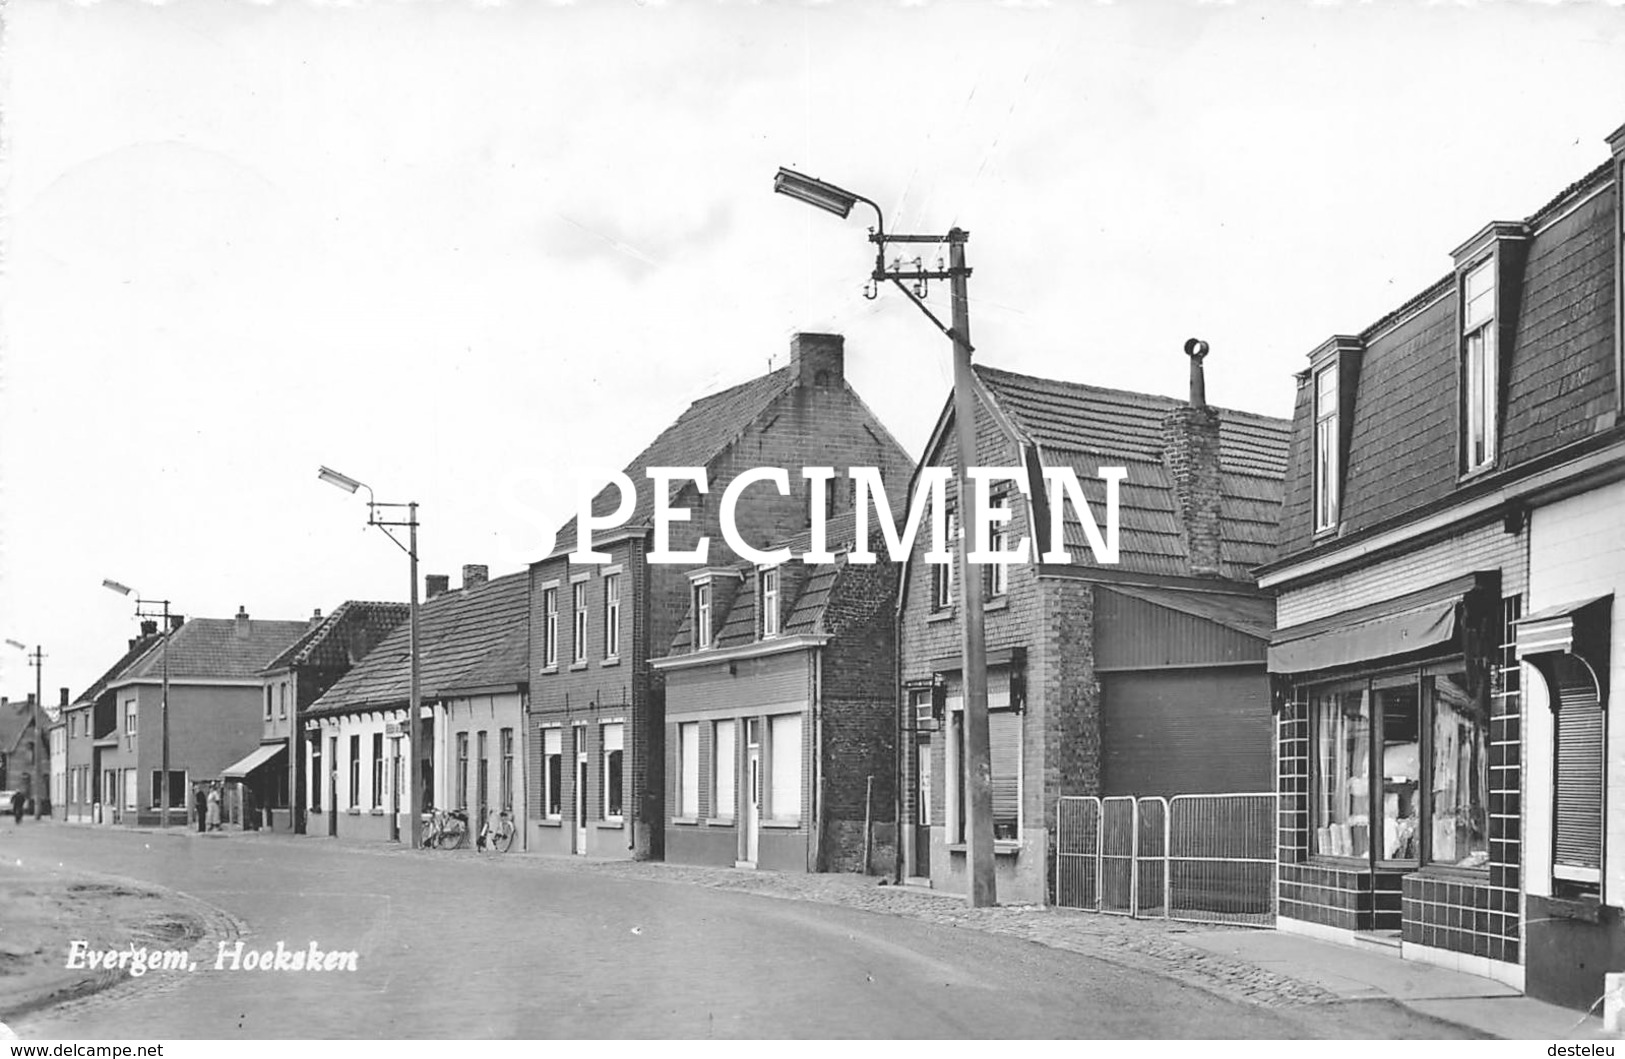 Hoeksken - Evergem - Evergem